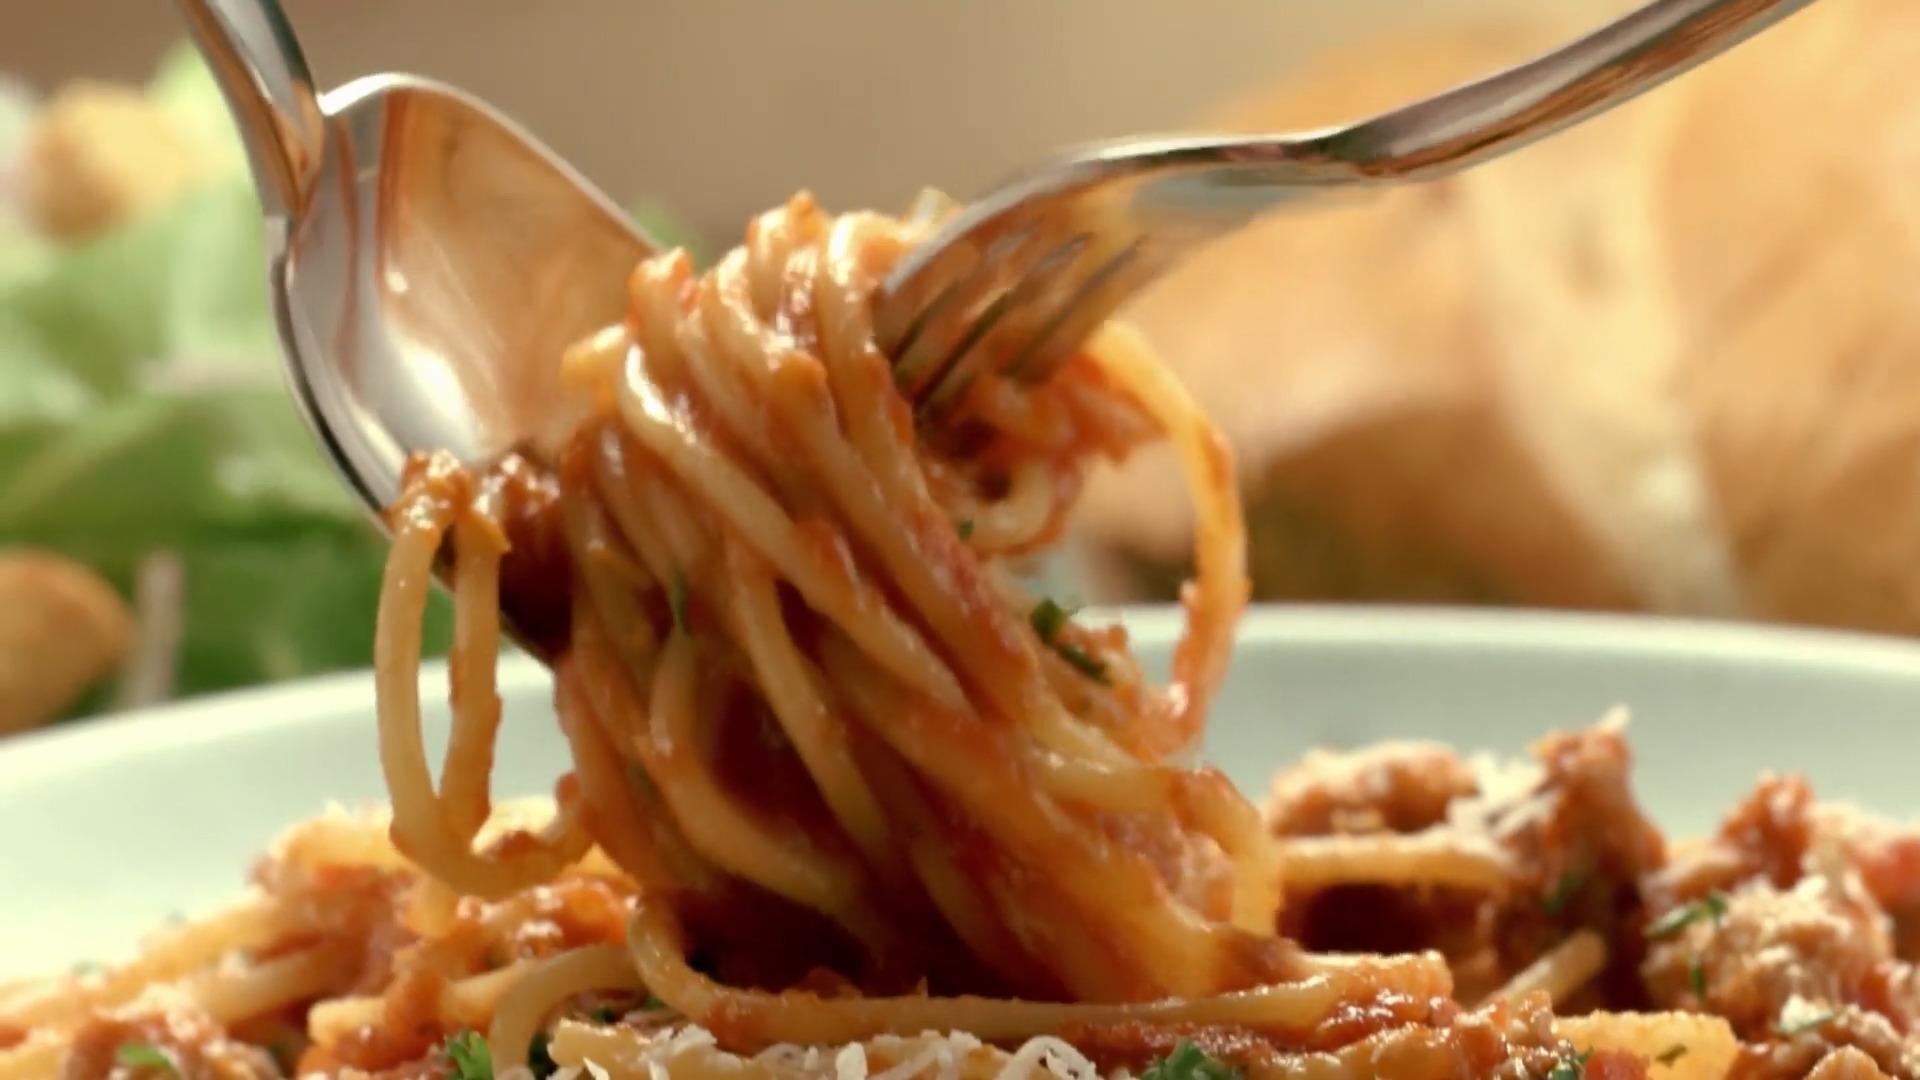 En Chefkoch, estas son las pastas con mejores críticas: spaghetti aglio, olio e pepperoncino